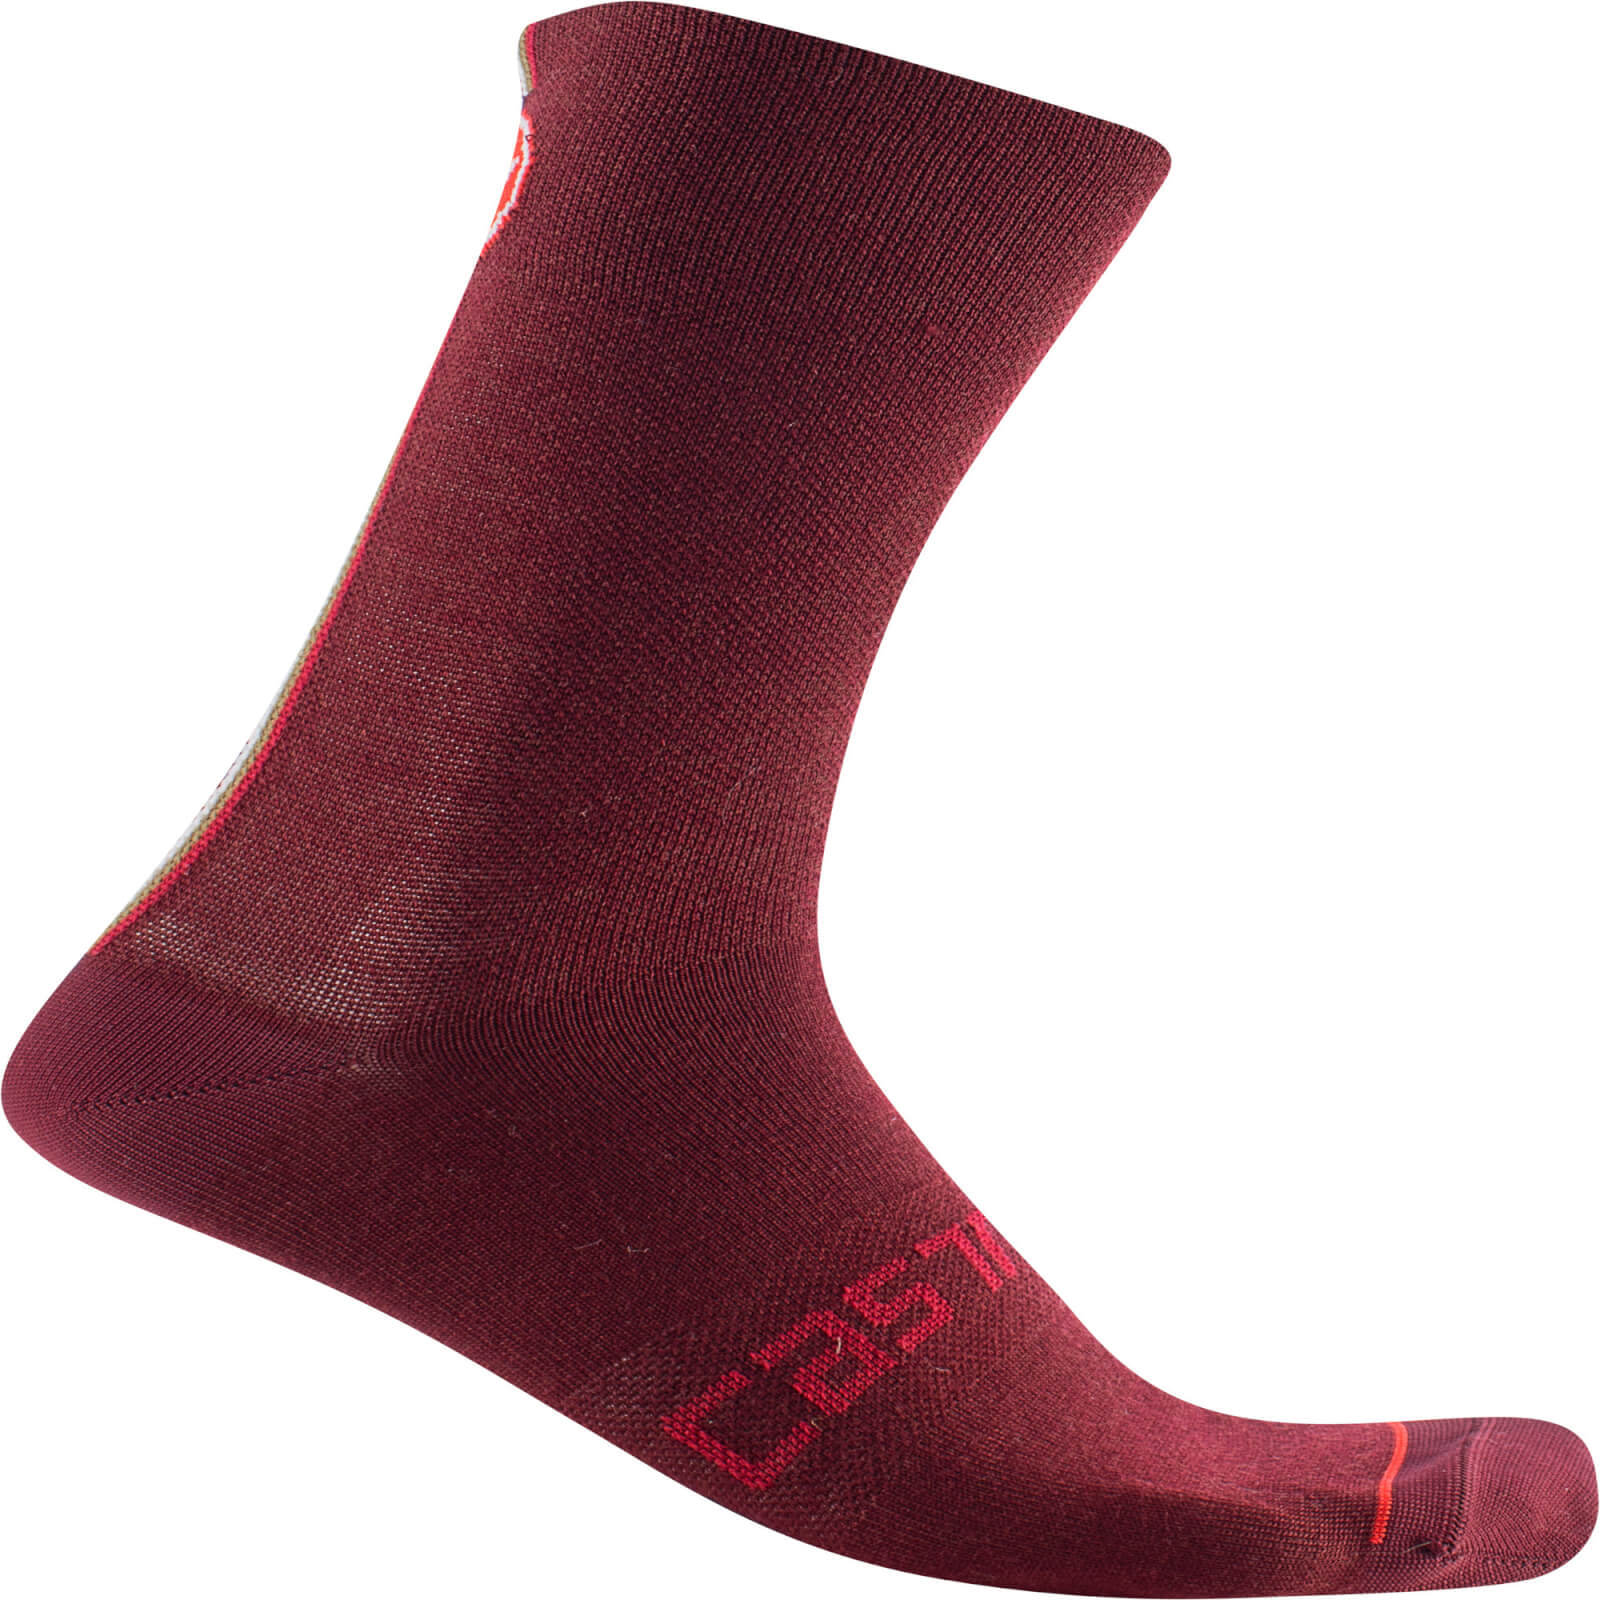 Castelli Racing Stripe 18 Socks - S/M - Bordeaux